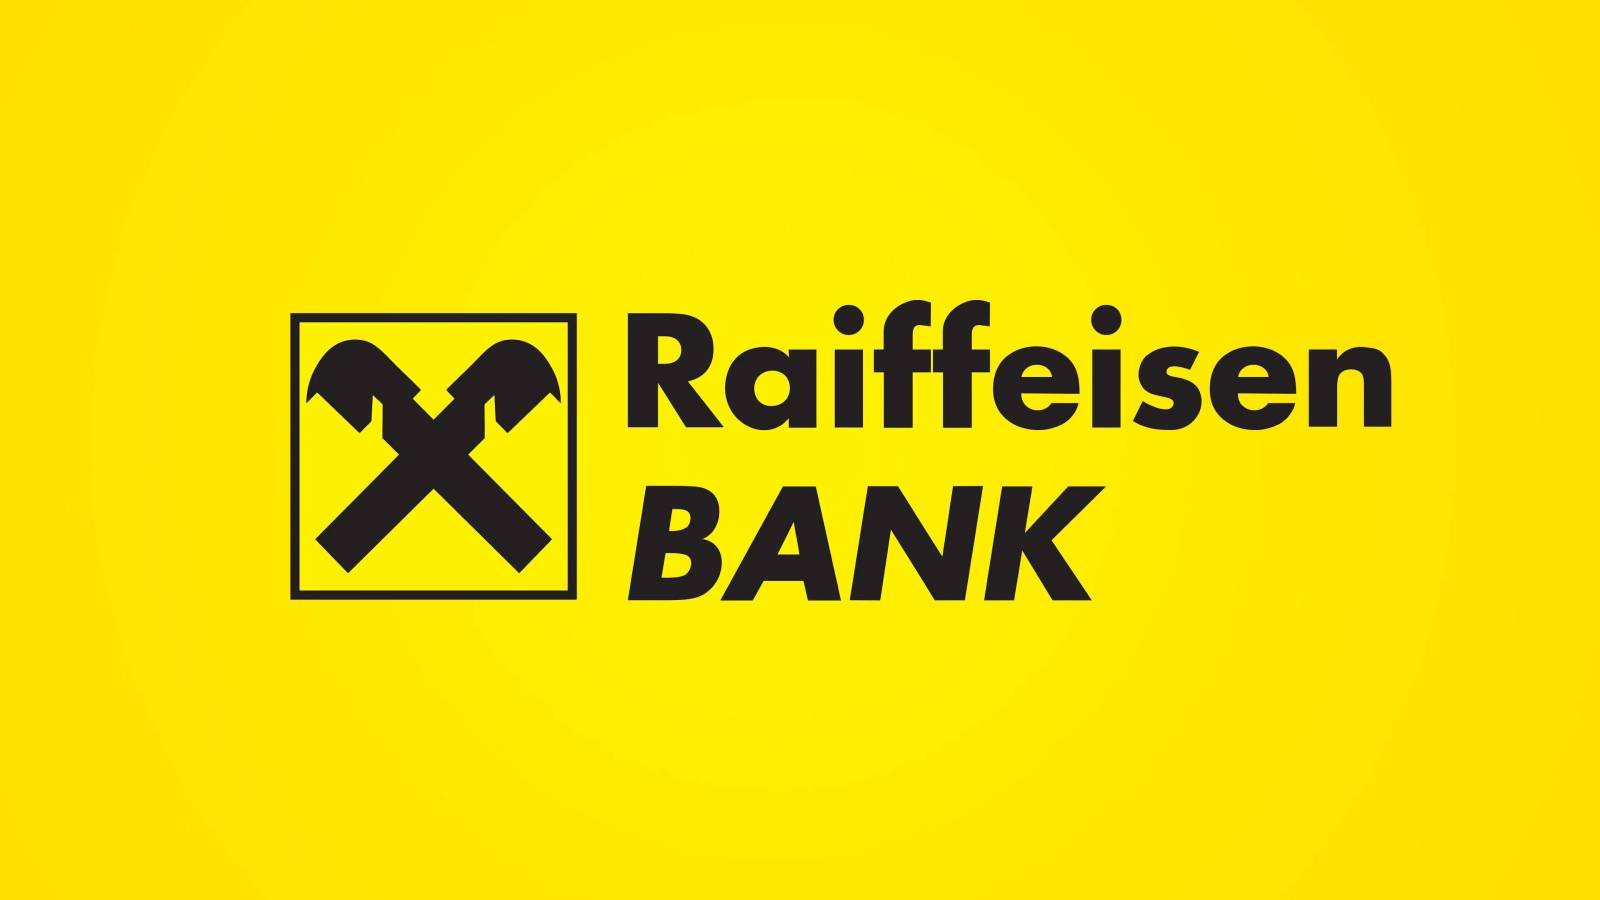 Raiffeisen Bank gratuit abonament voyo voucher decathlon smart market